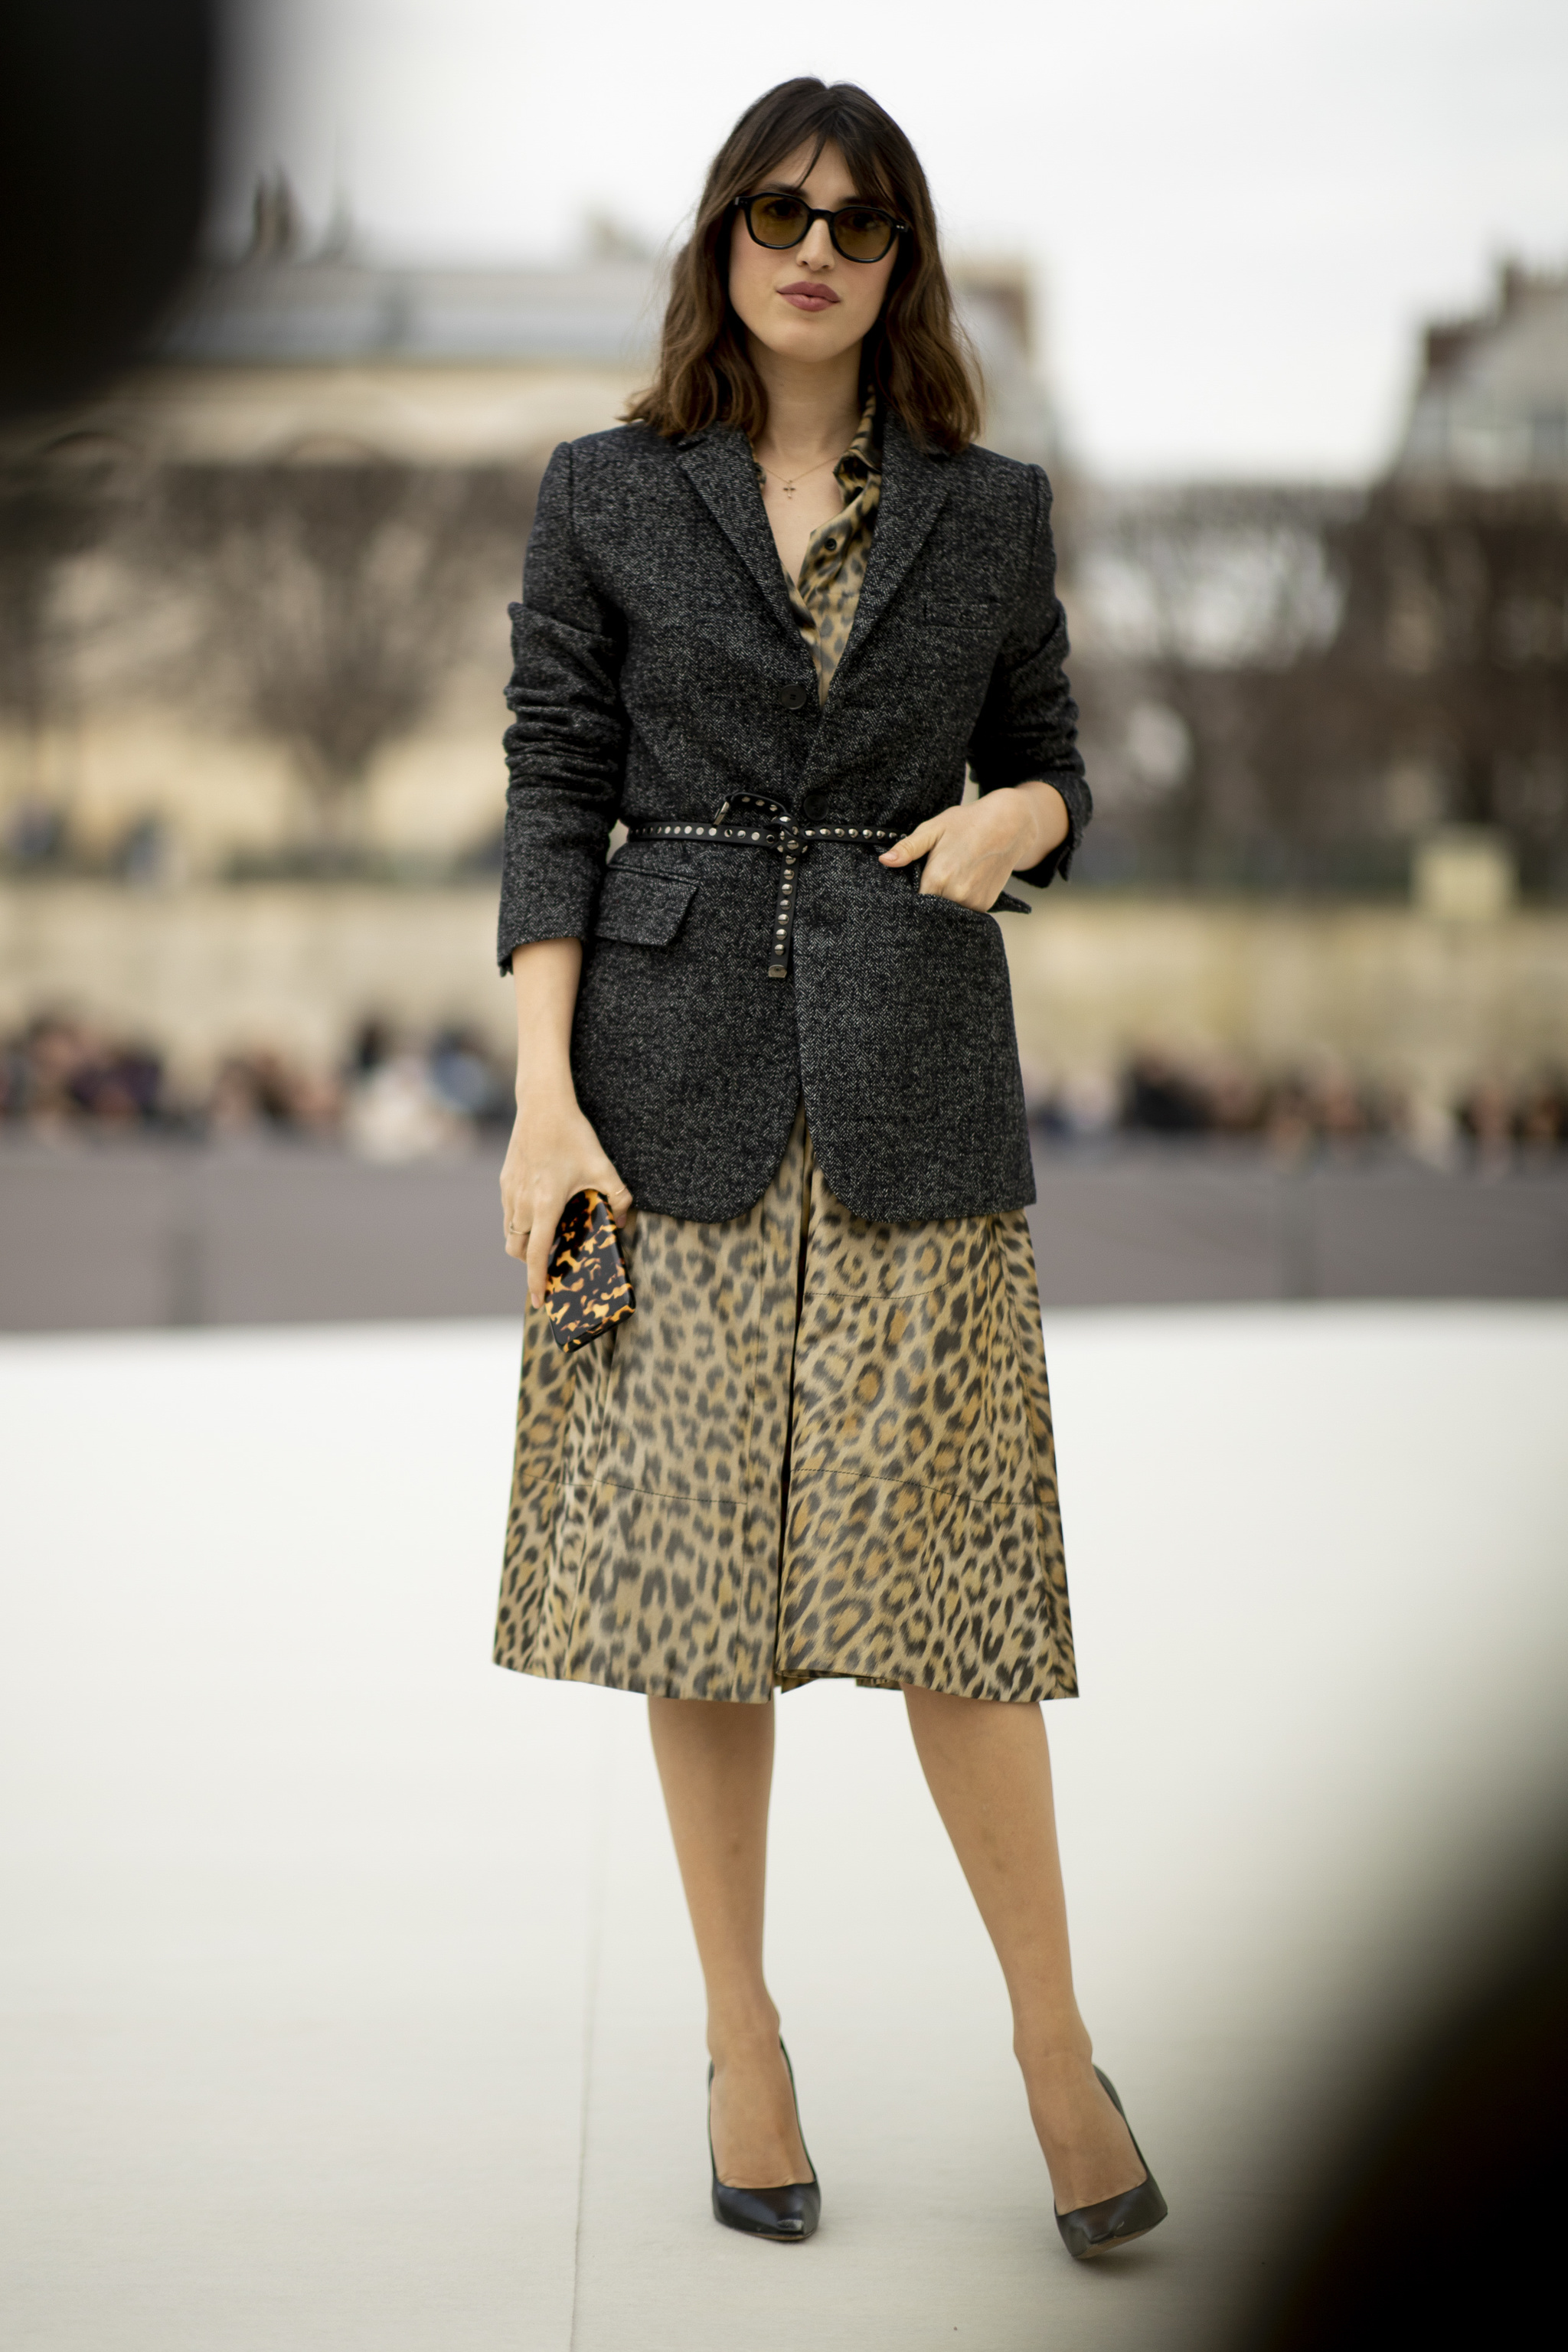 Jeanne Damas con vestido de leopardo.